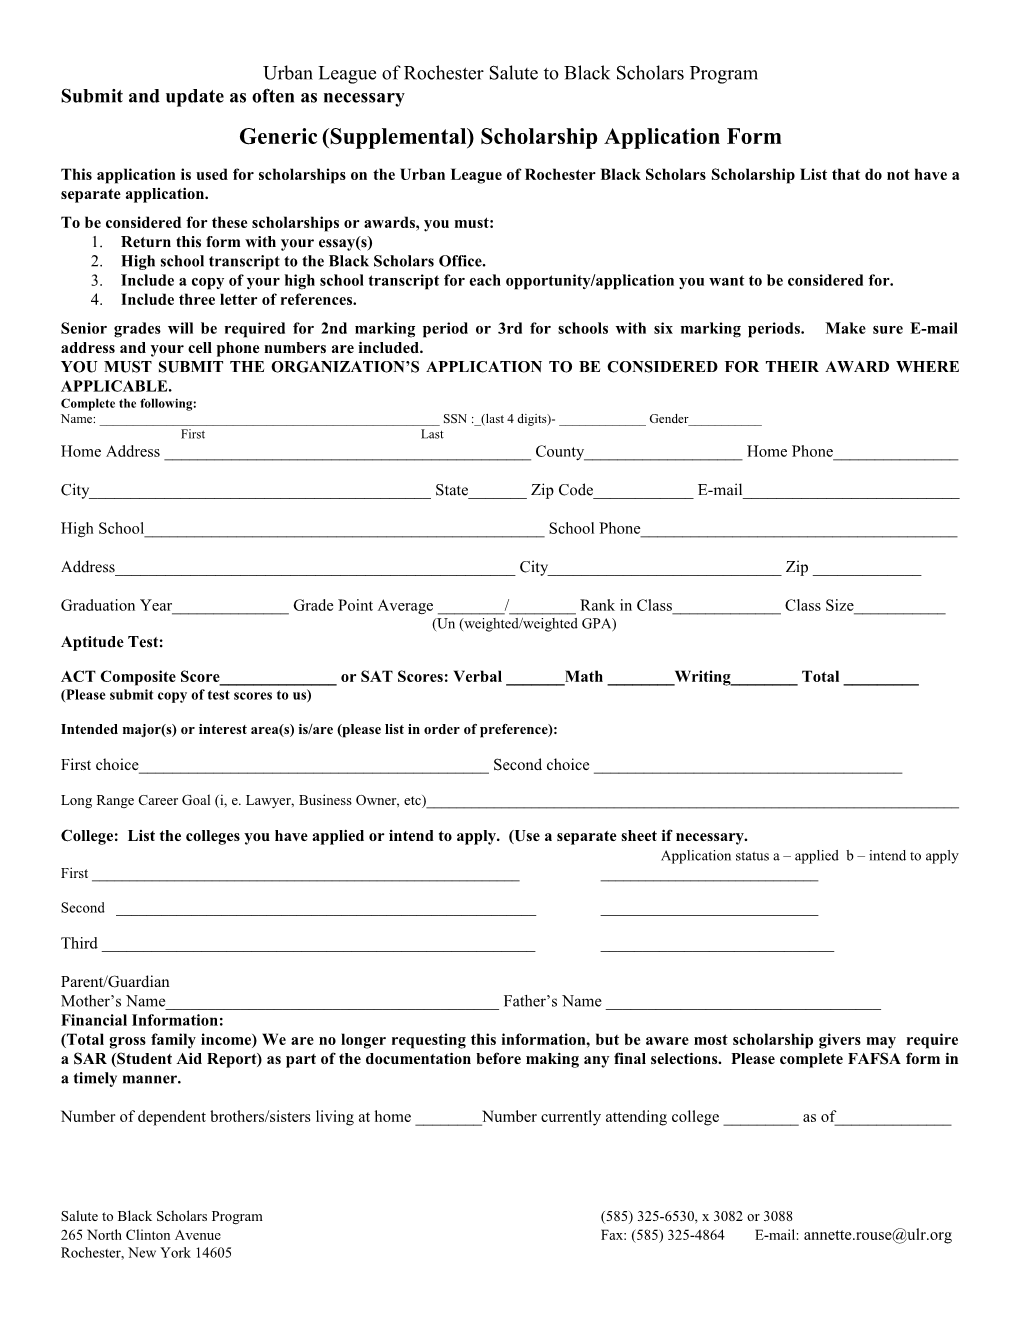 Common Scholarship Application Form